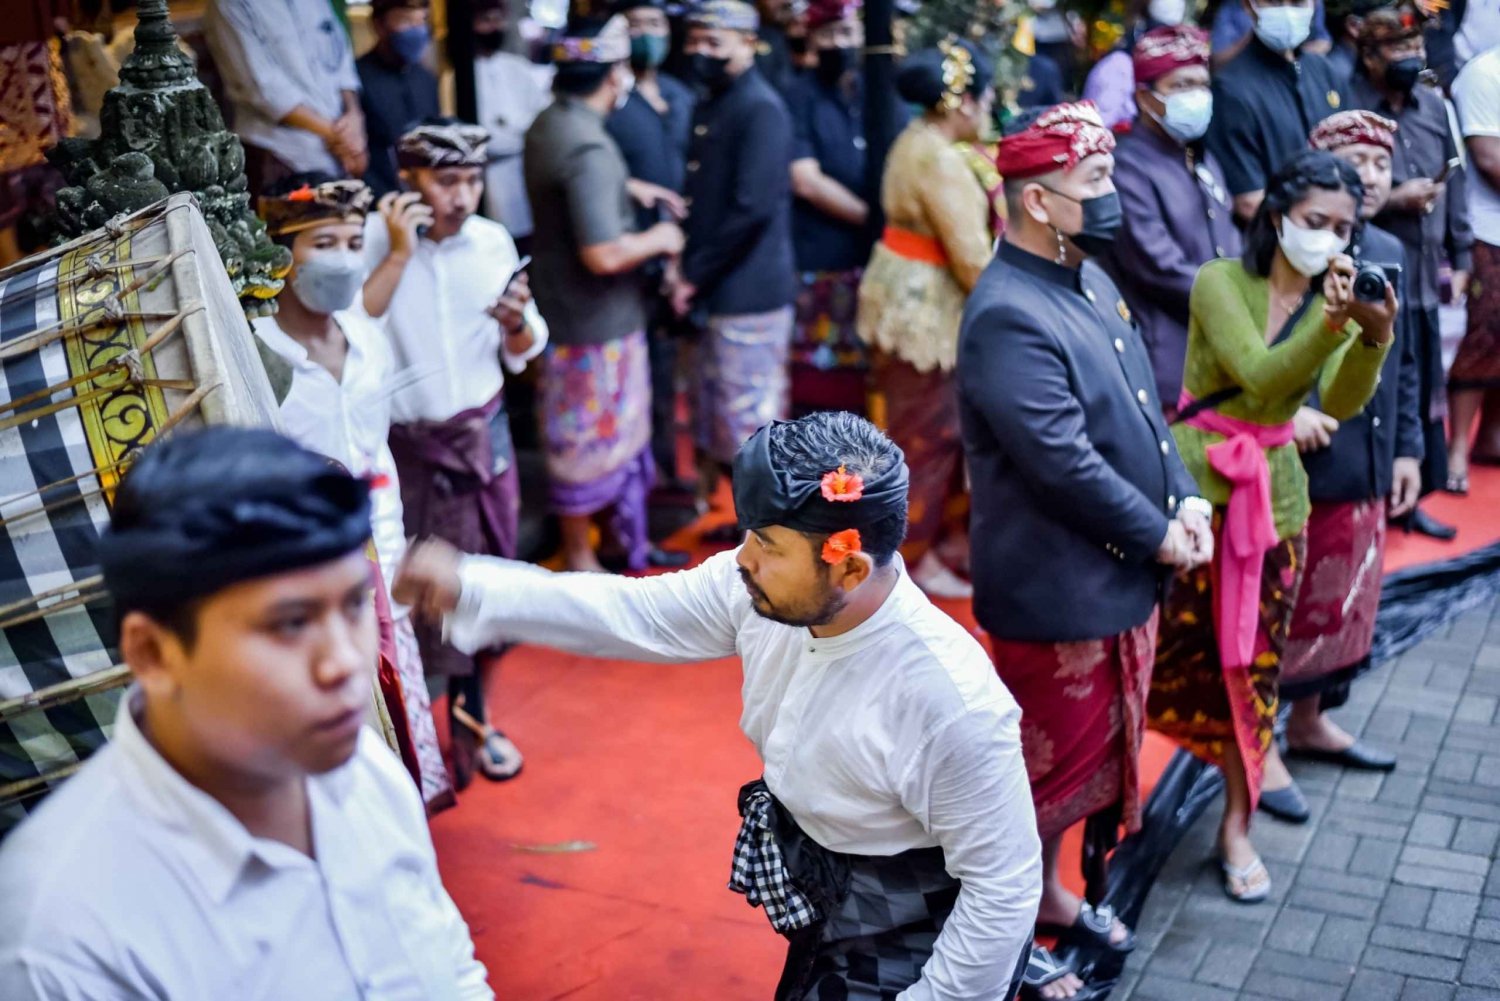 Ubud: Traditional Balinese Music Lesson